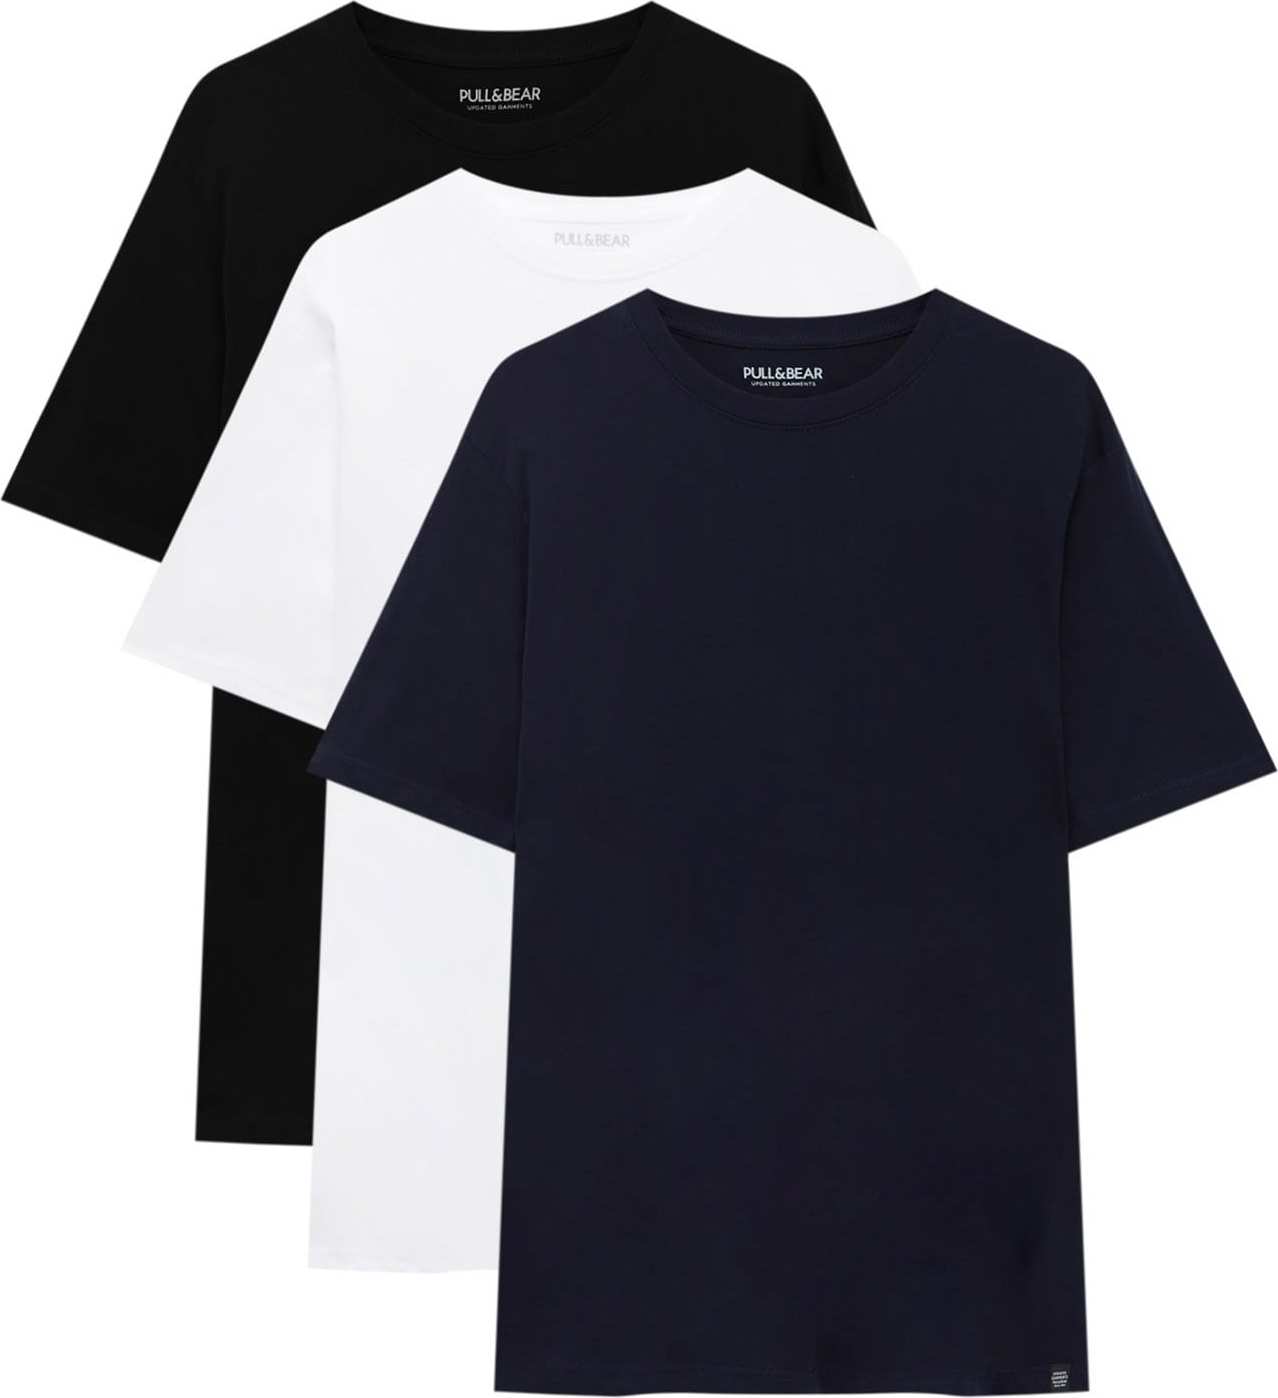 Tričko Pull&Bear námořnická modř / černá / bílá